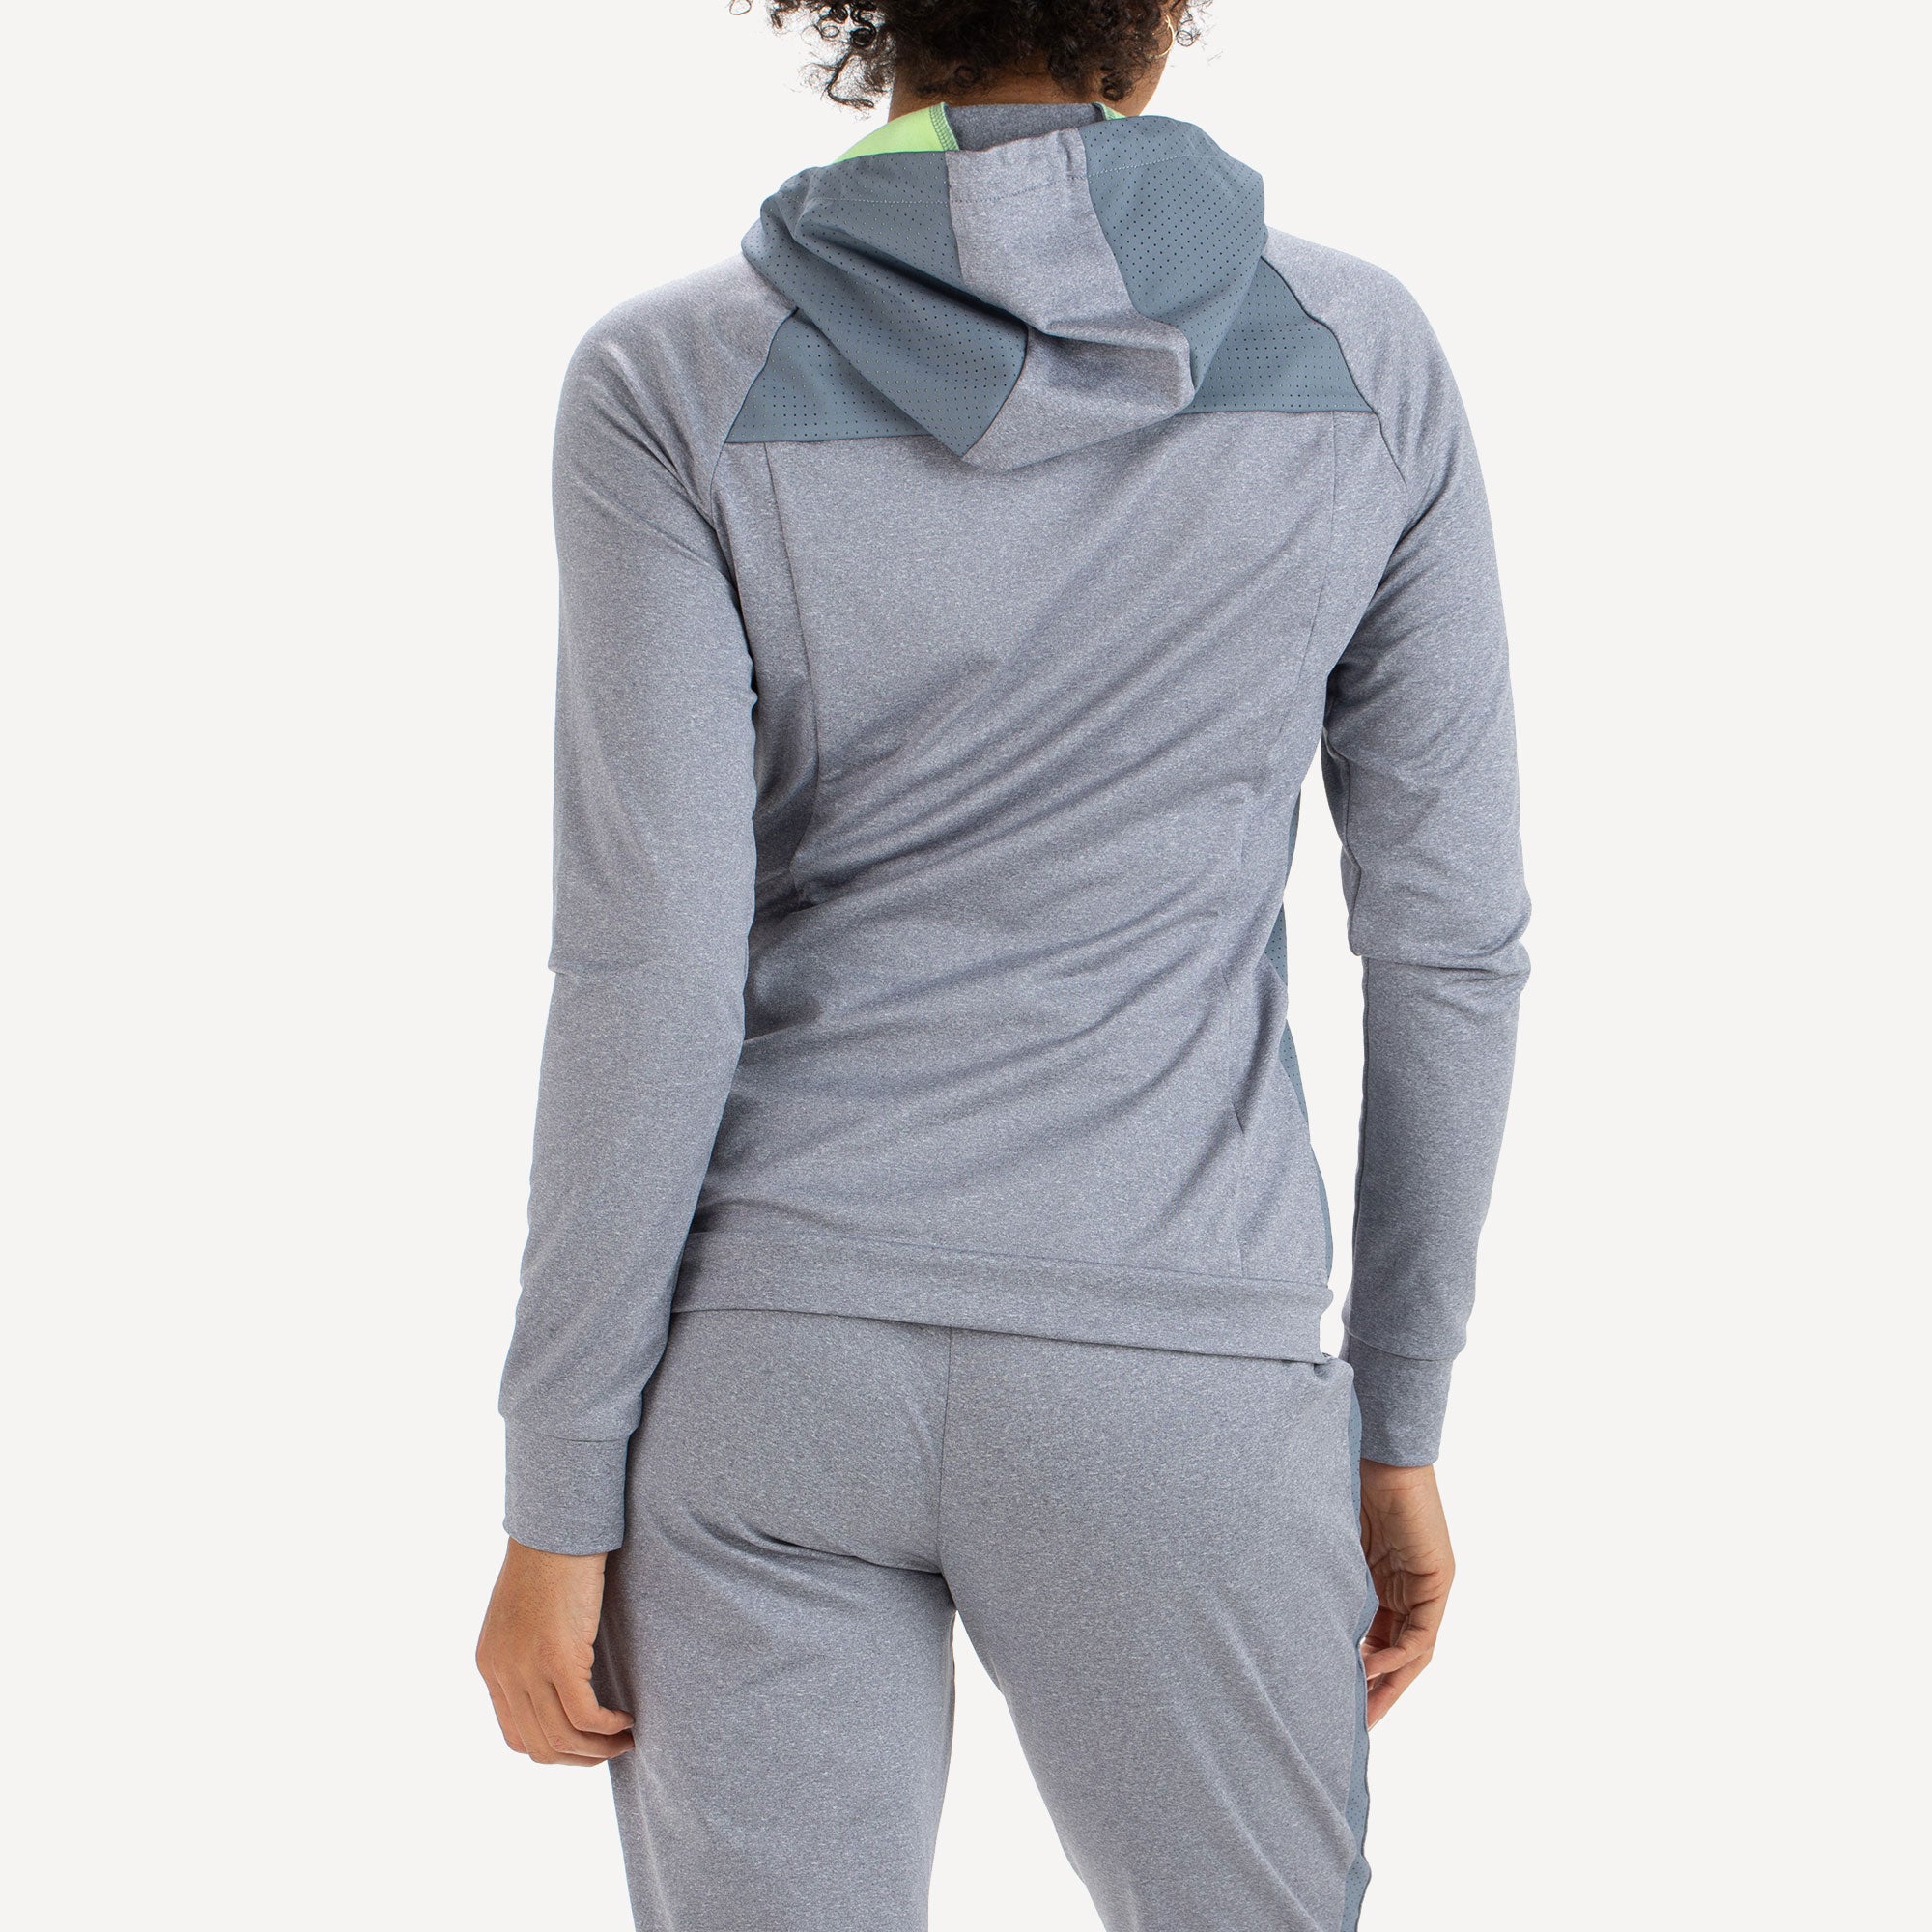 Sjeng Sports Atina Women's Hooded Tennis Jacket Grey (2)